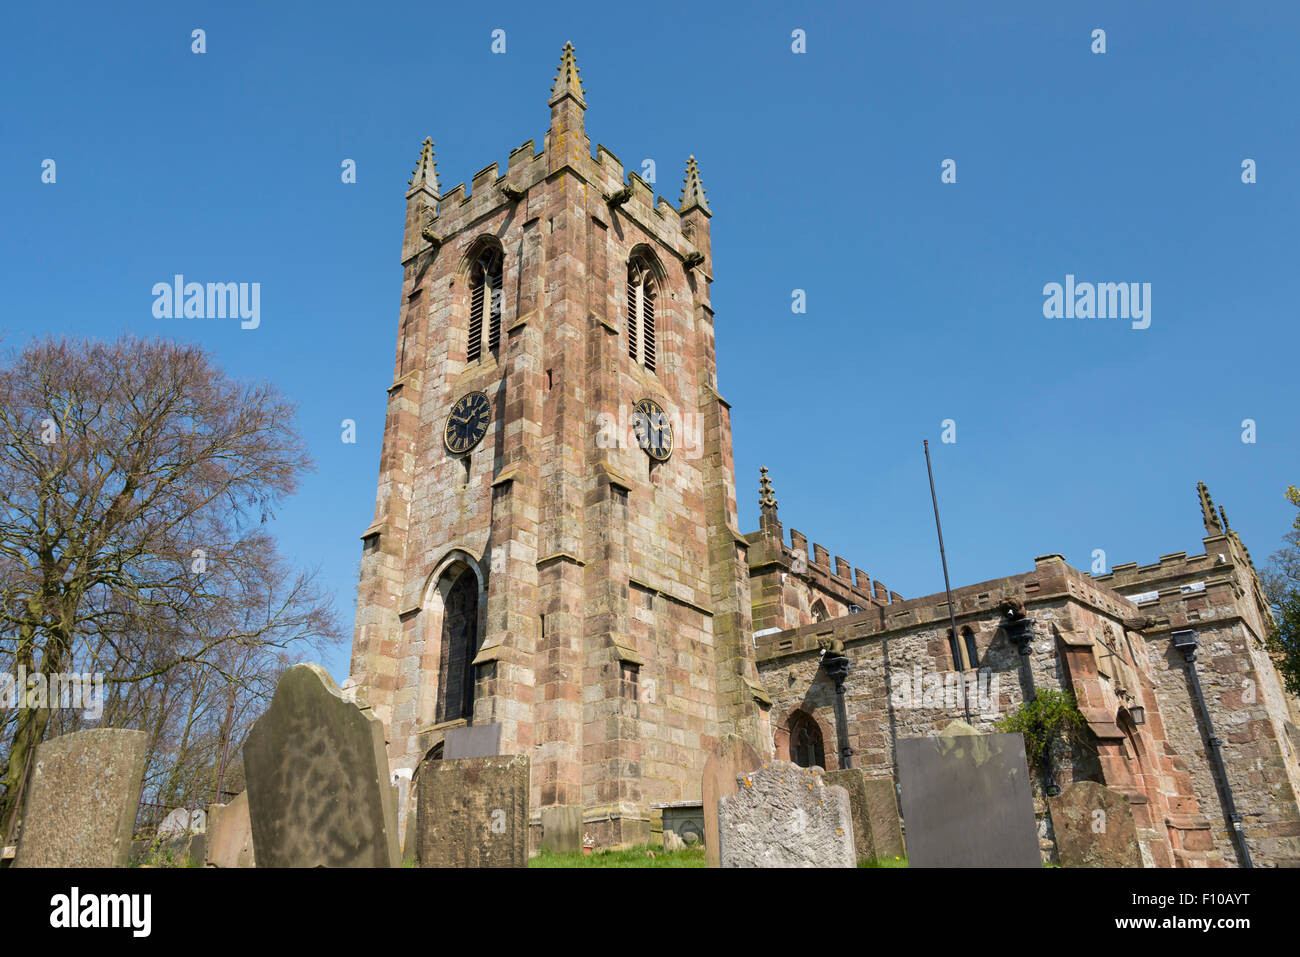 St Giles Church, Hartington, Peak District National Park, Derbyshire, England, UK. Stock Photo